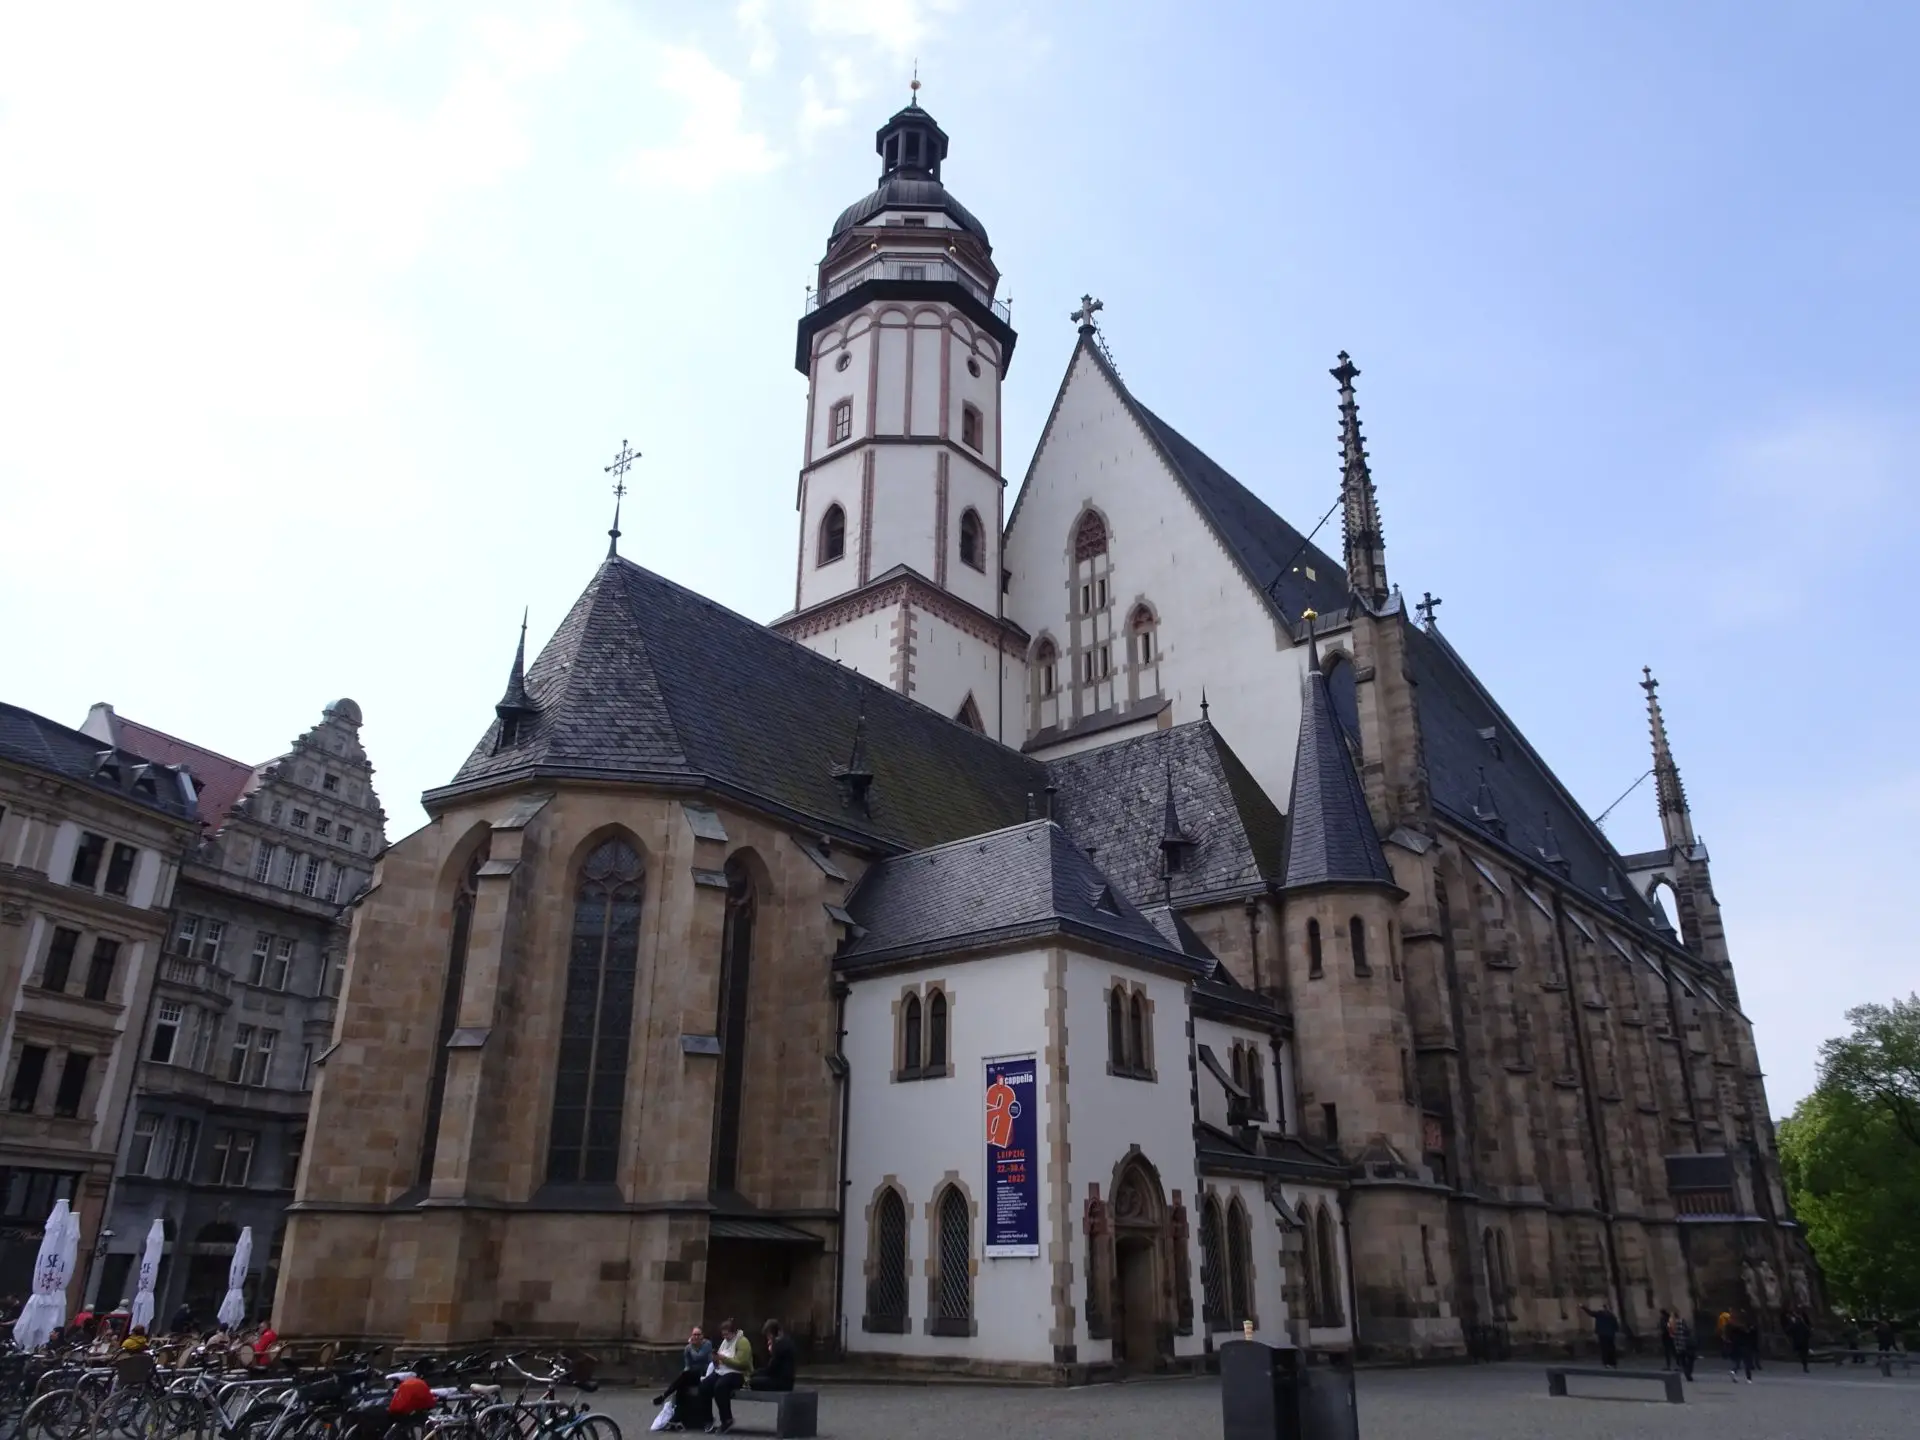 An imposing renaissance church